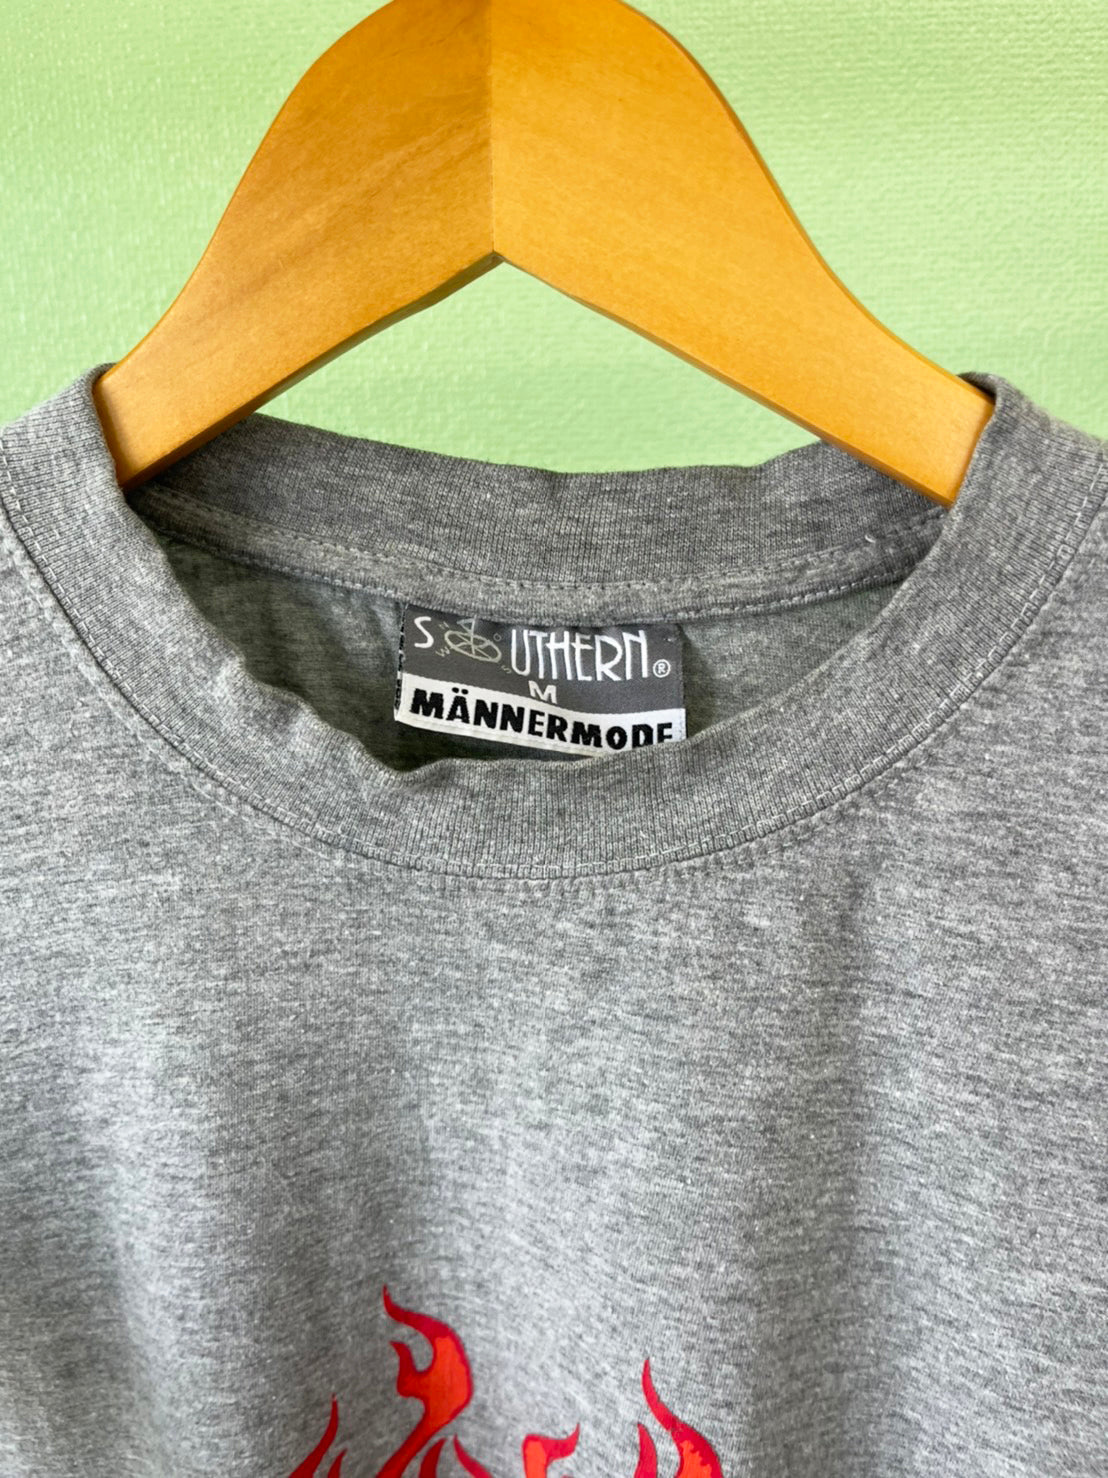 【Southen Mannermode 】EU vintage skateboard t-shirt  (men's M)